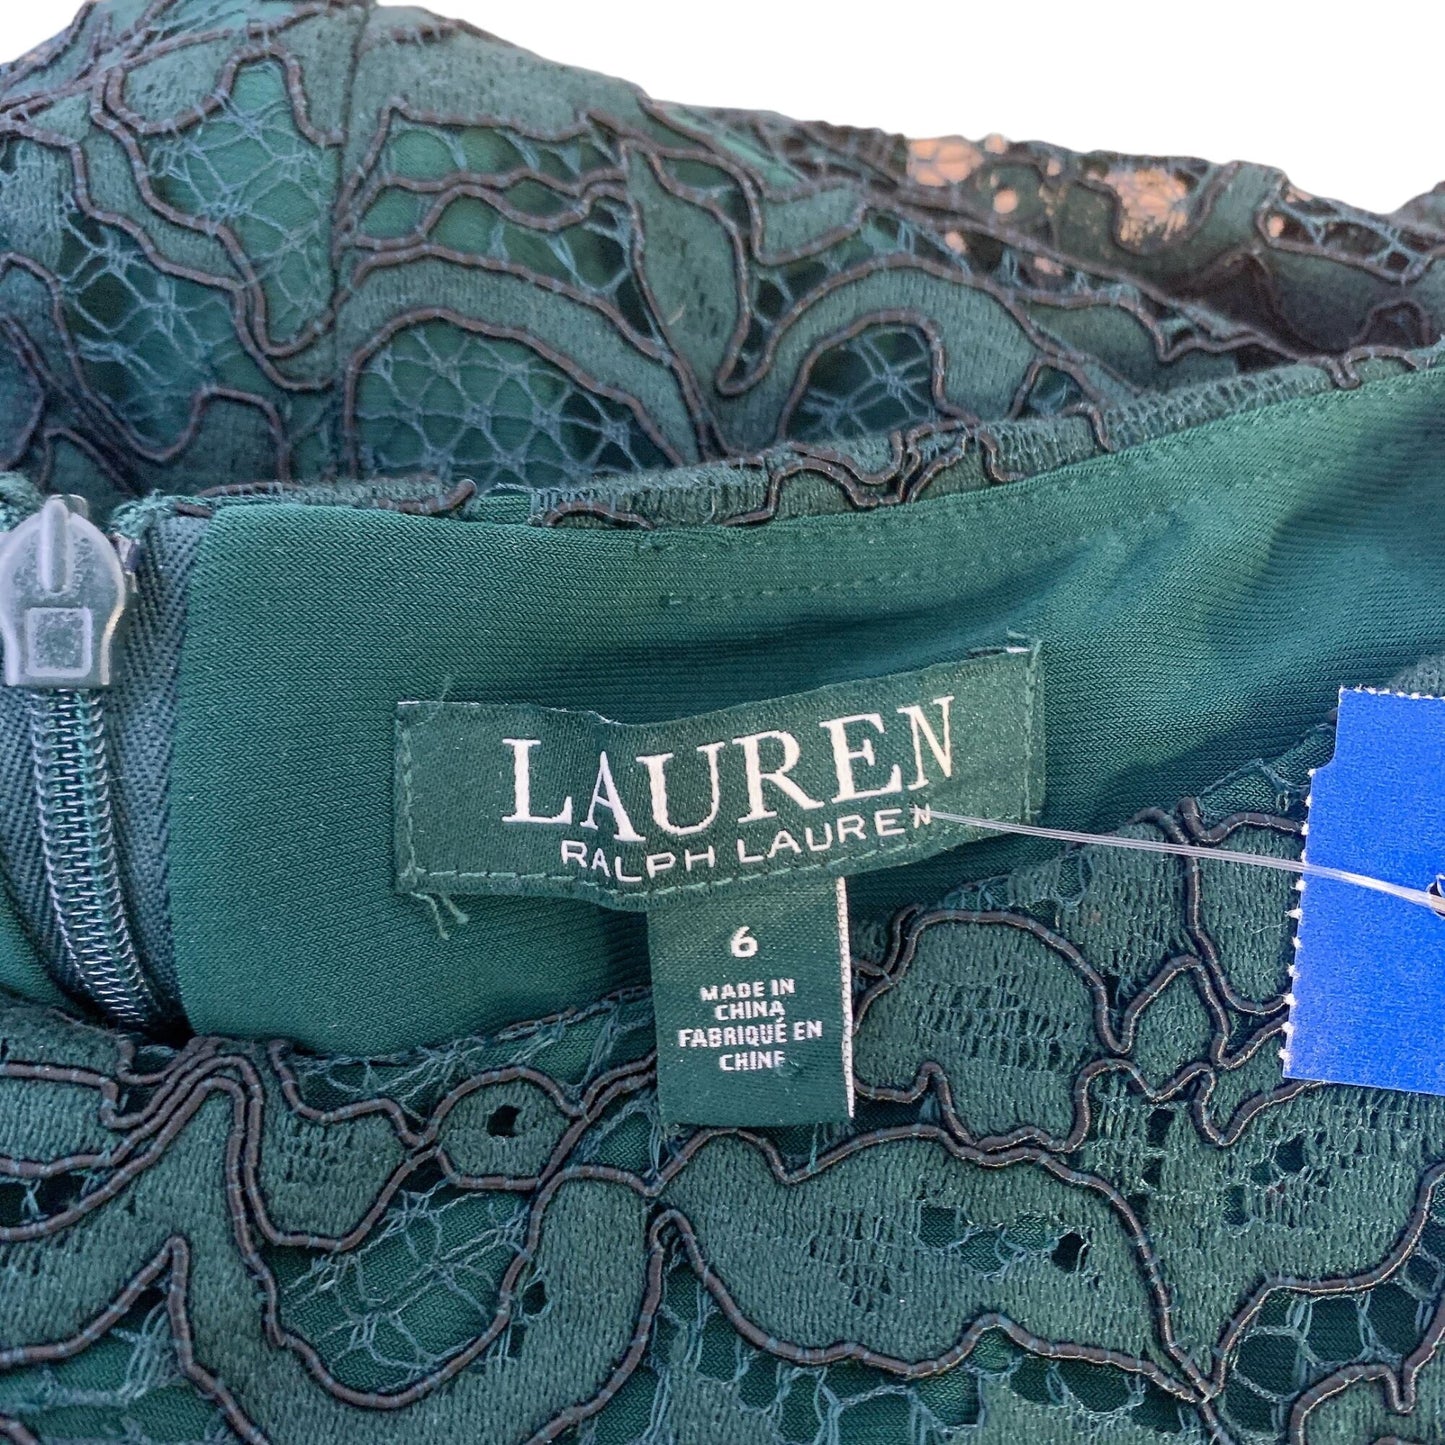 *Lauren Ralph Lauren Green Lace Dress Size 6